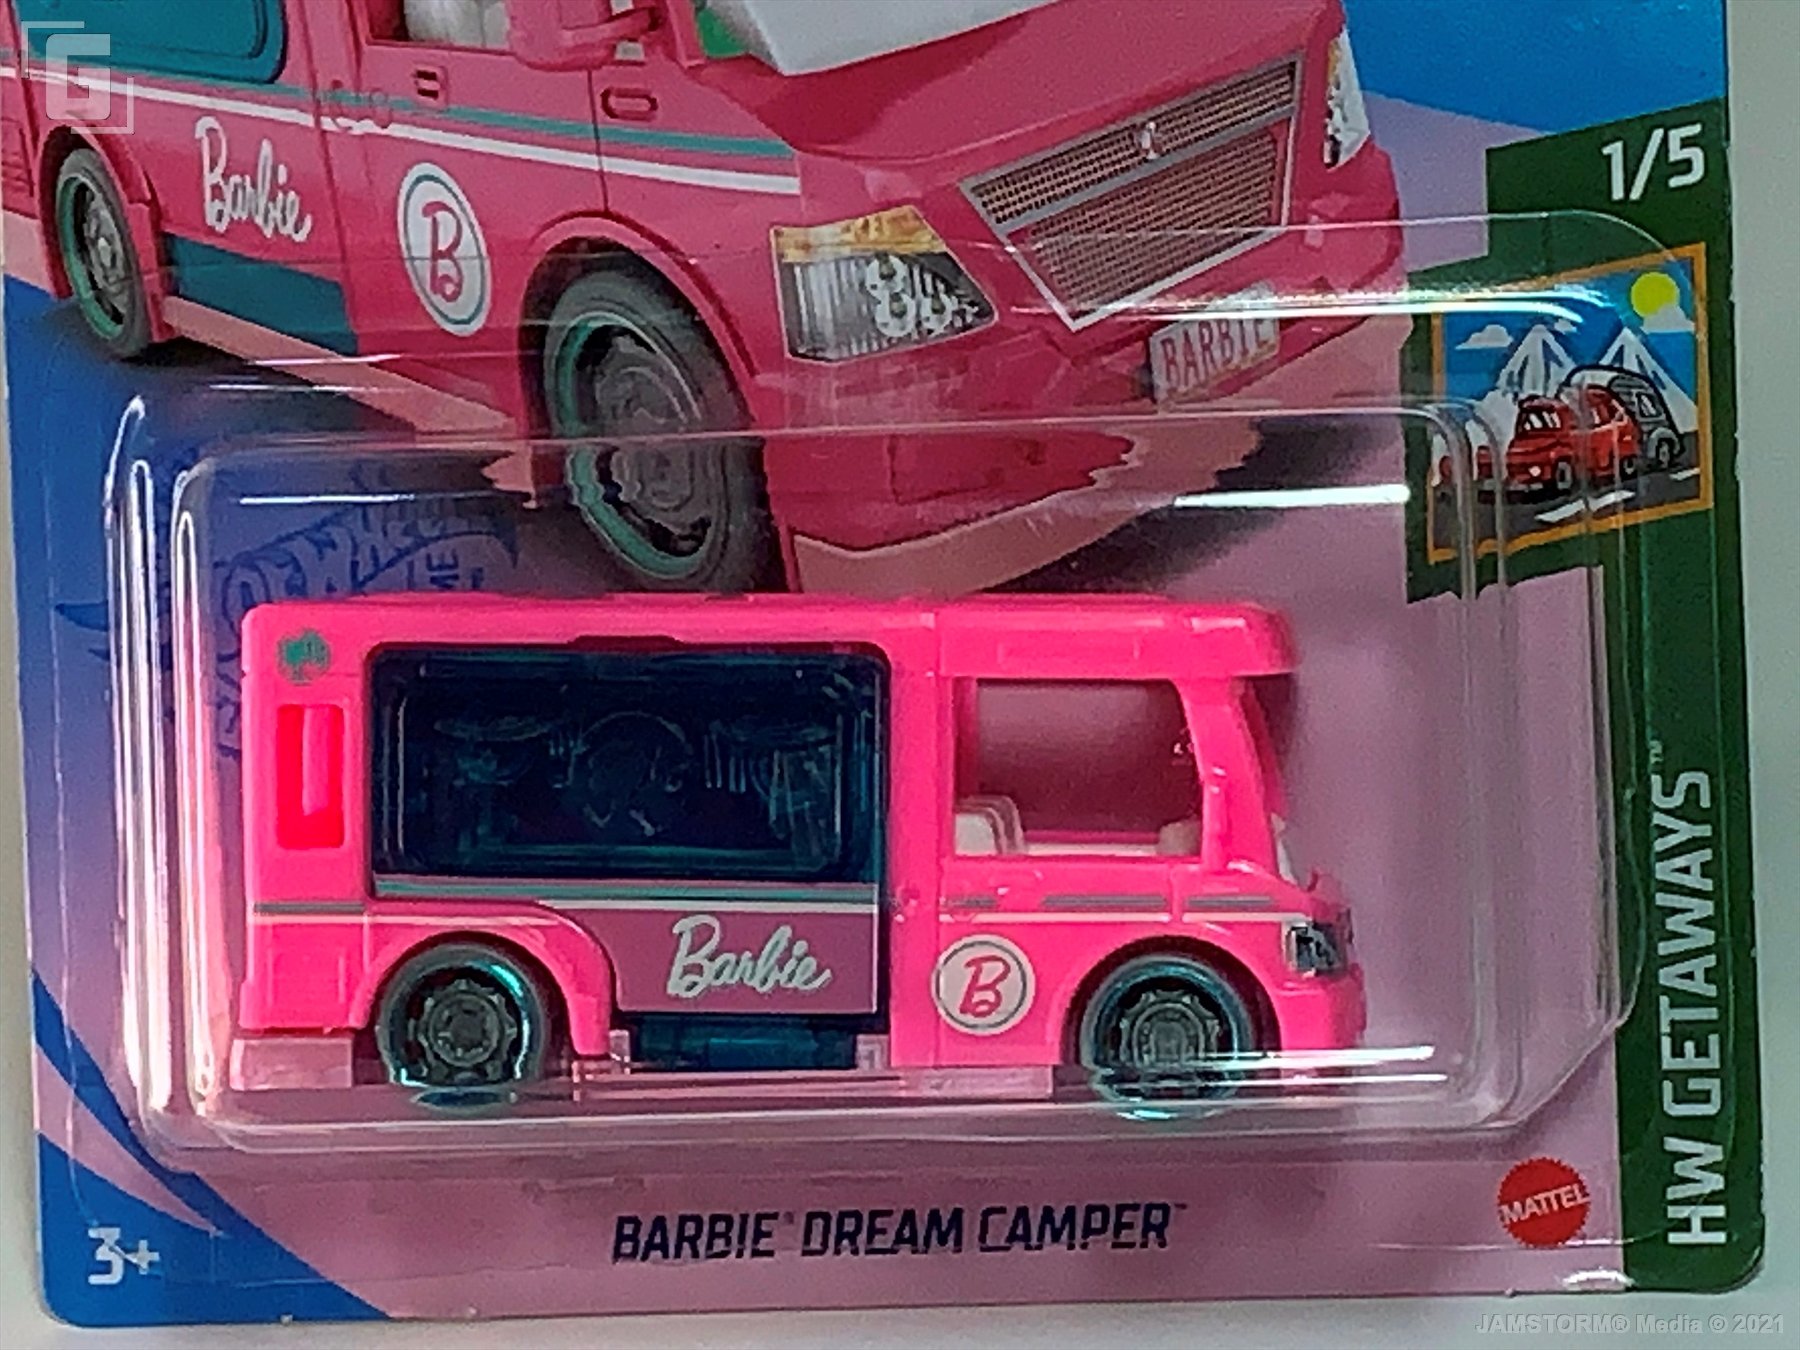 Details about   Hot Wheels Barbie Dream Camper Car New 2021 HW Gateaways 1/5 Mattell New 